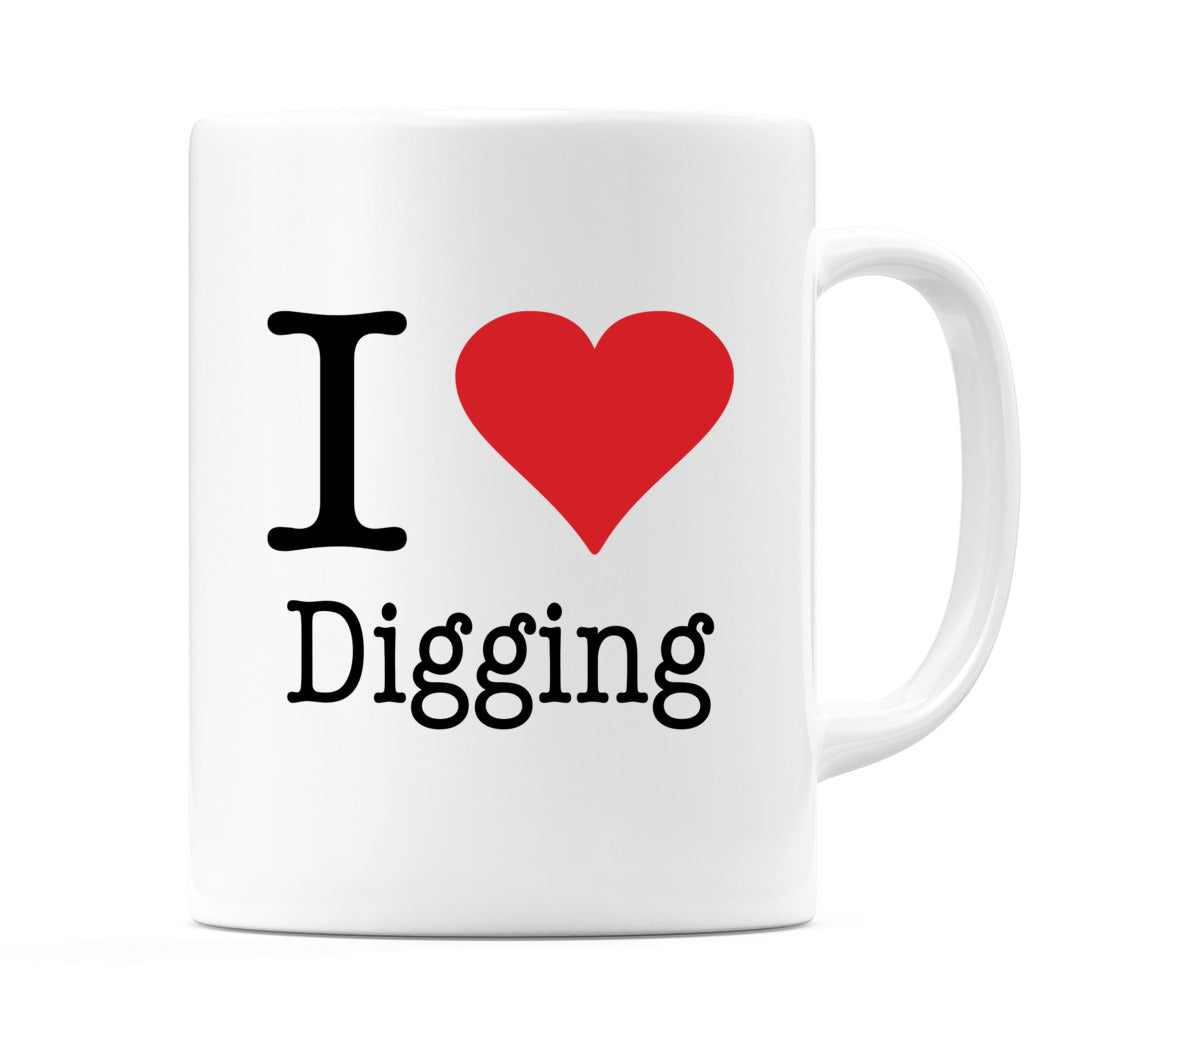 I Love Digging Mug